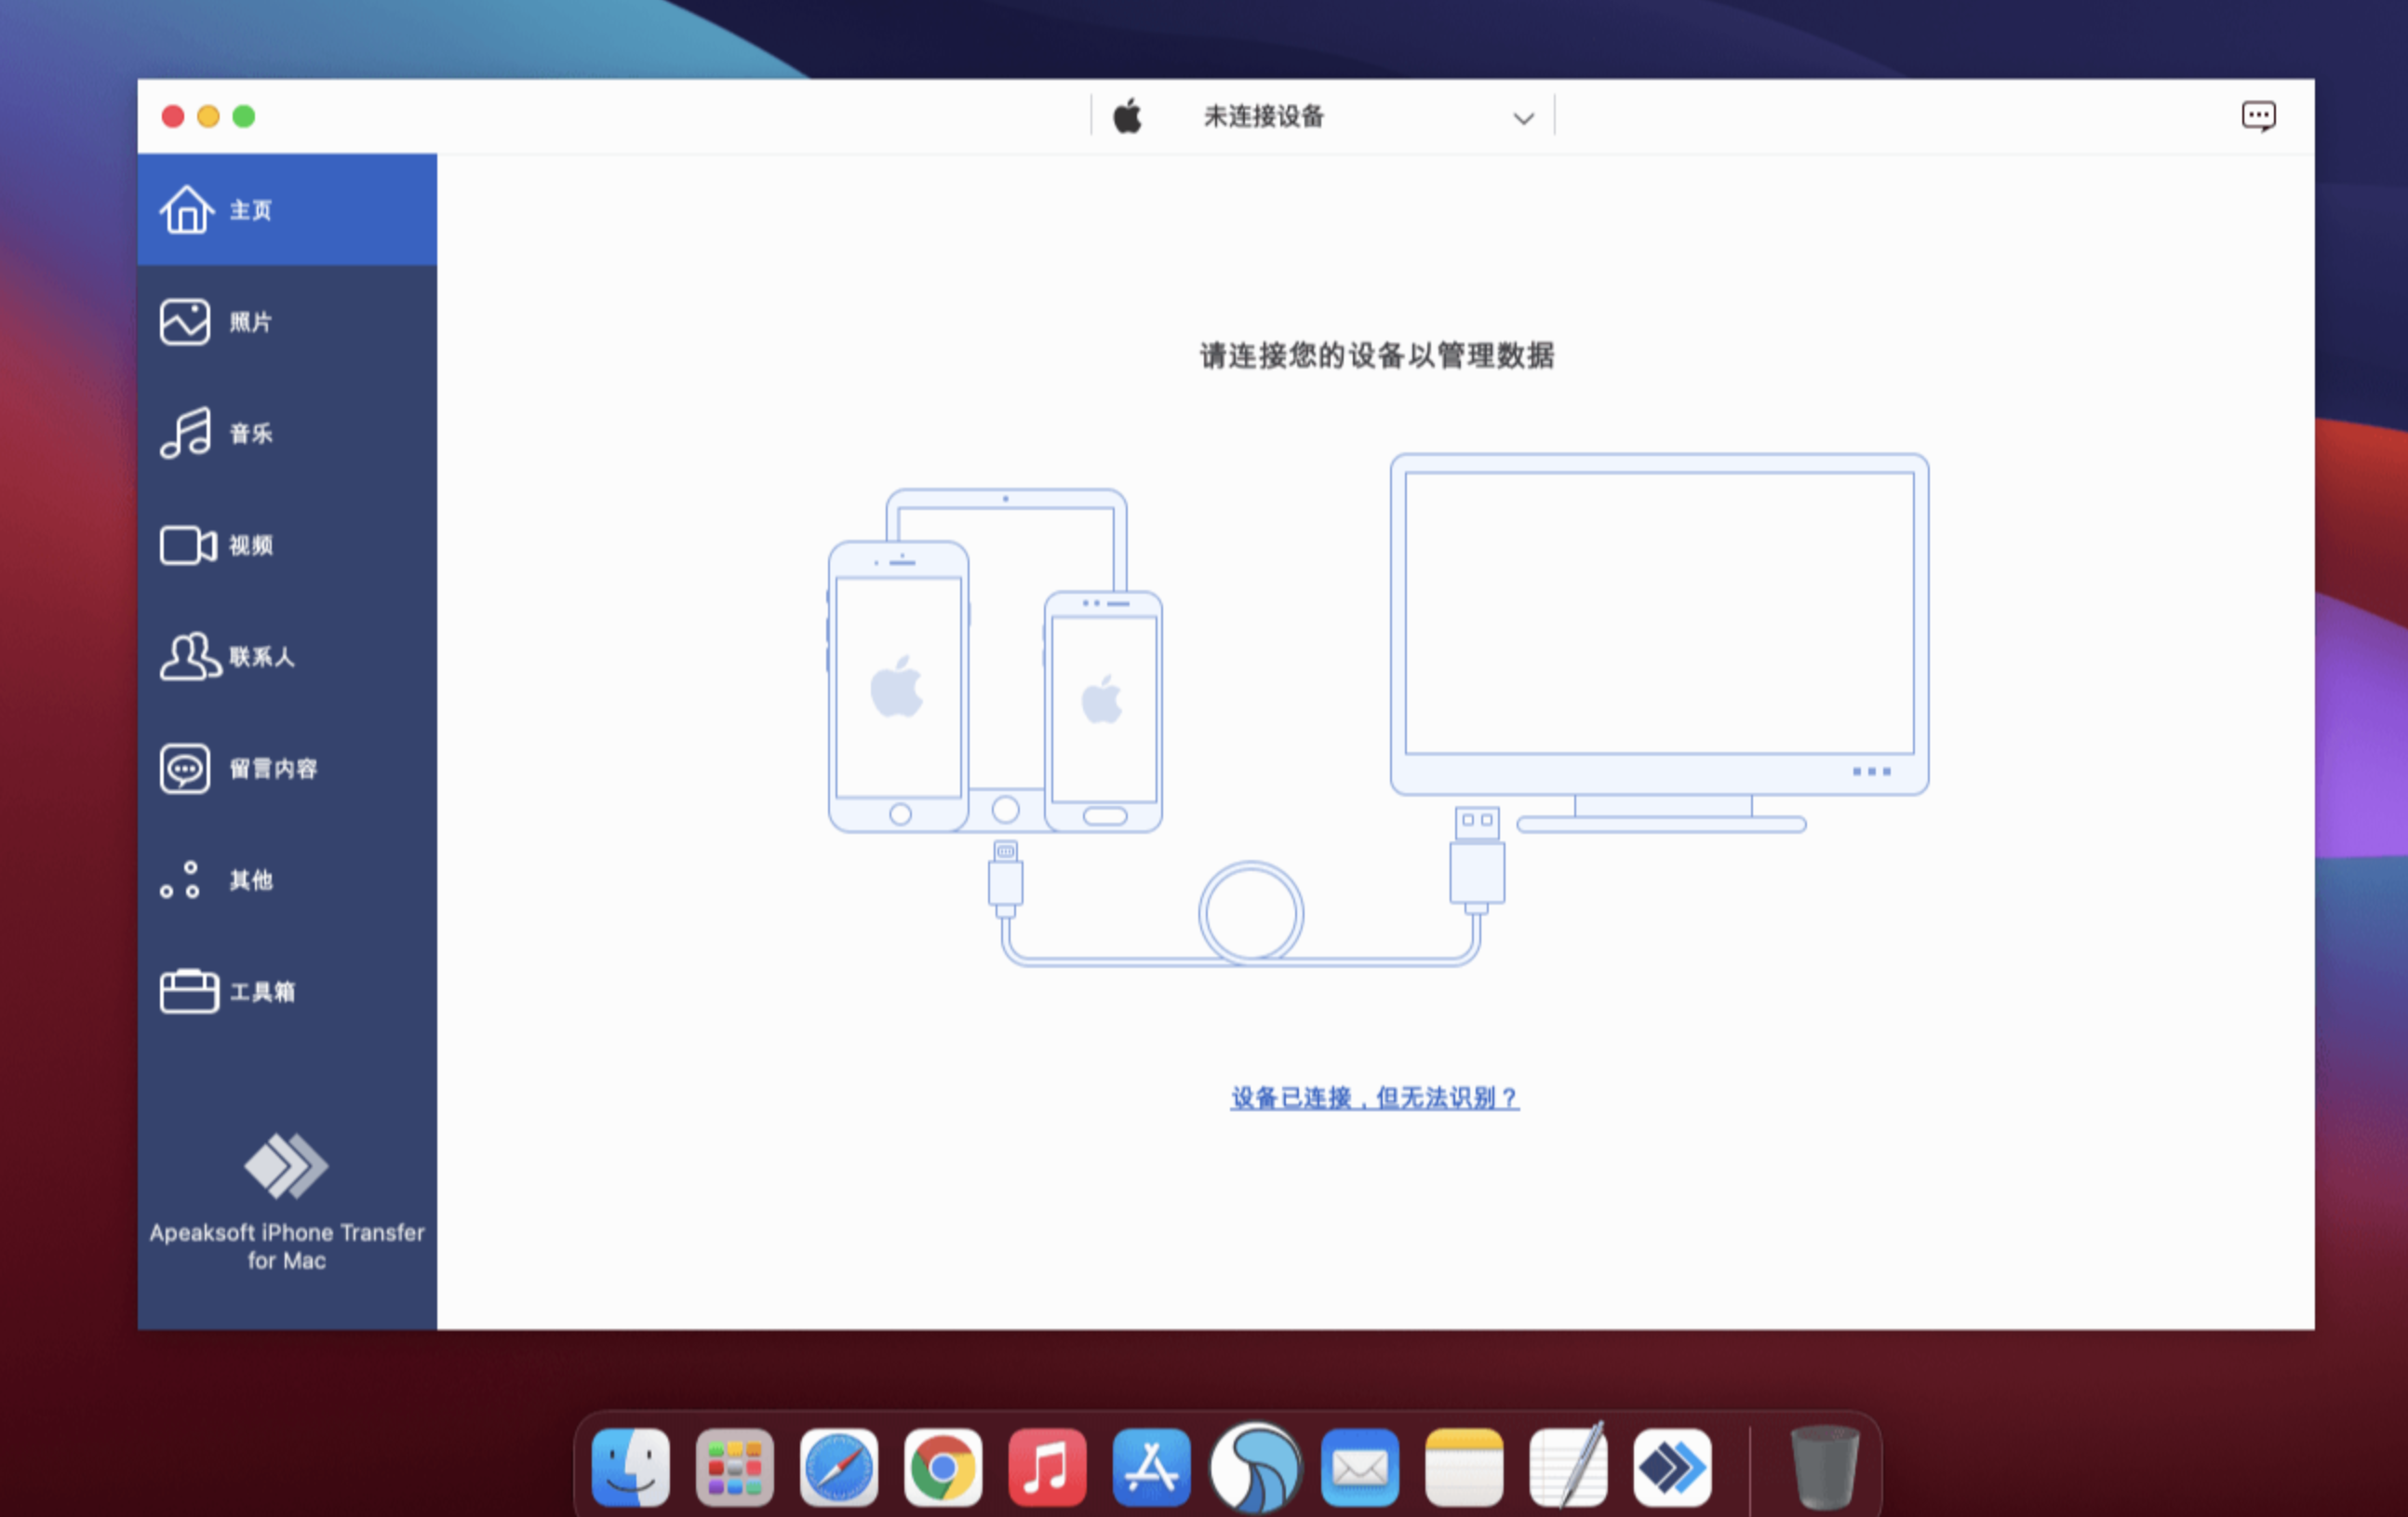 Apeaksoft iPhone Transfer for Mac v2.0.70 中文破解版 iPhone数据传输 苹果电脑